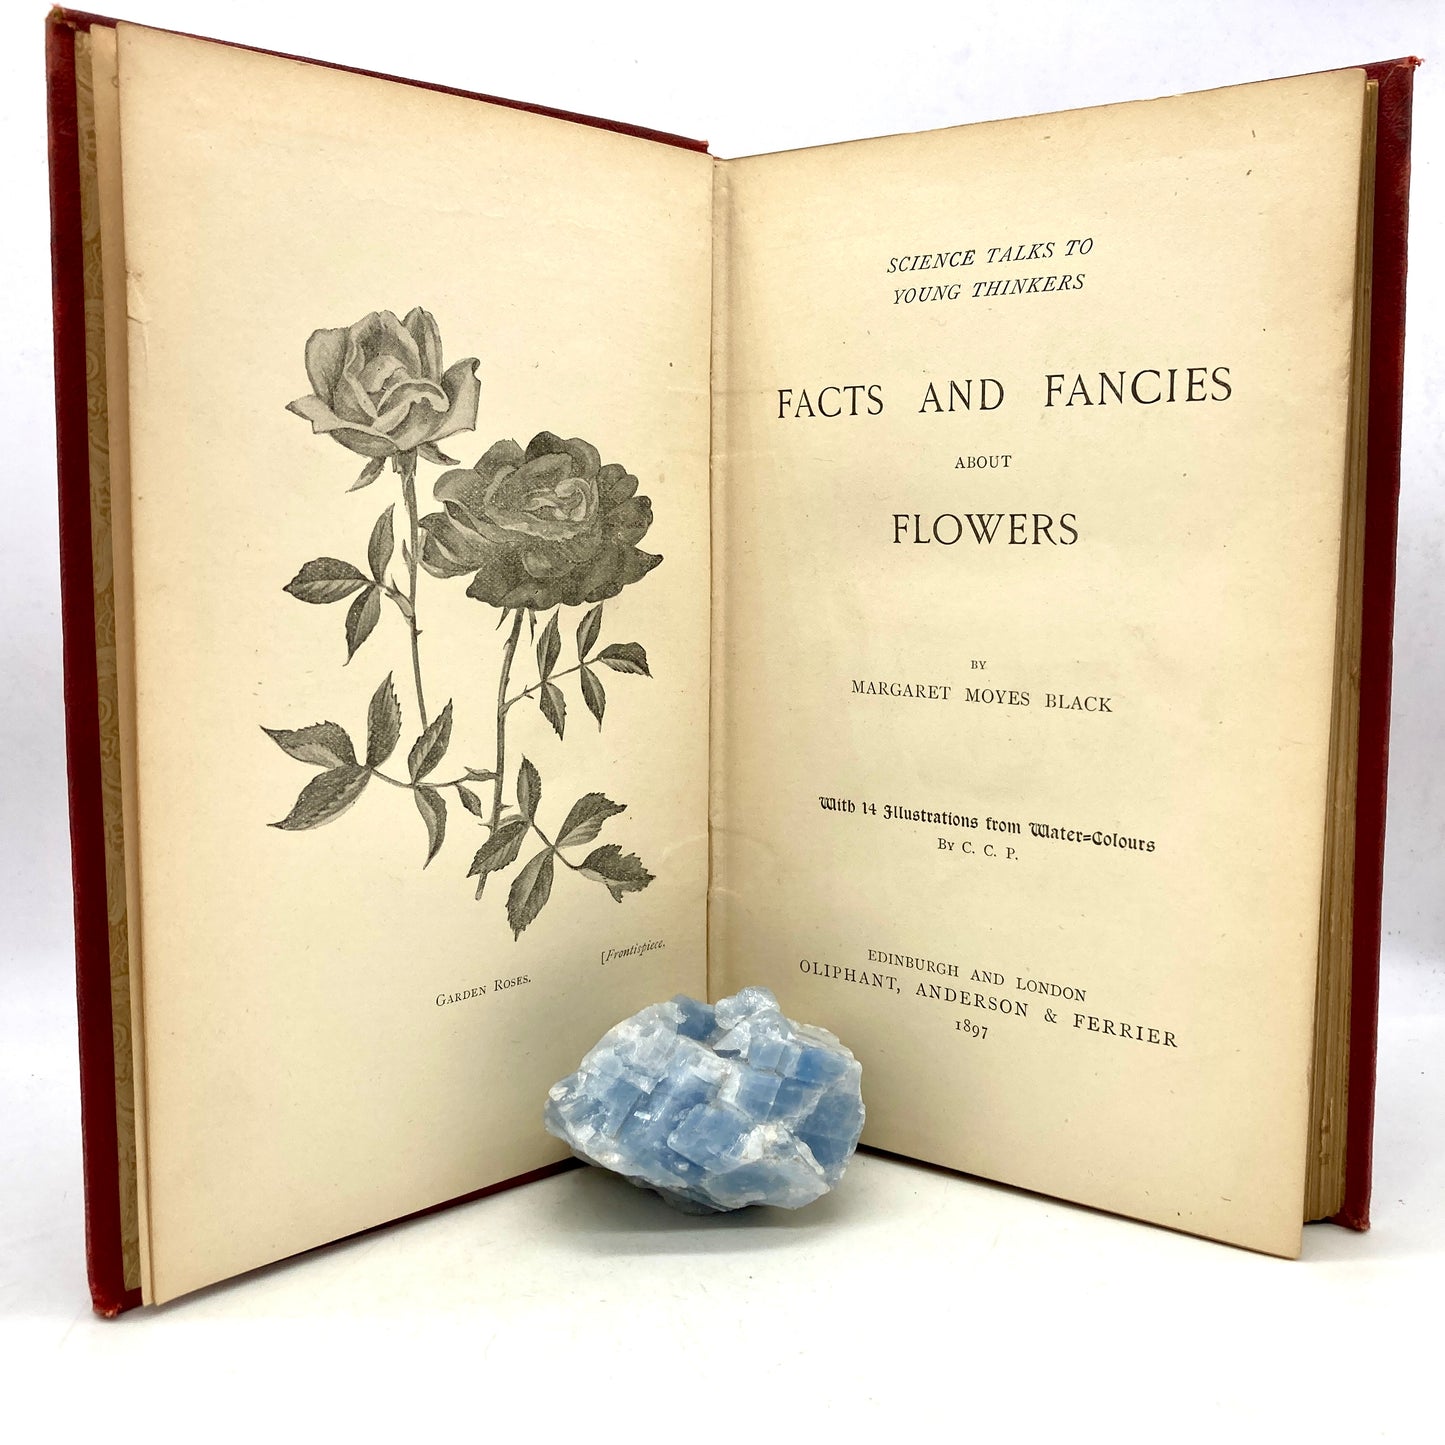 BLACK, M.M. "Facts & Fancies About Flowers" [Oliphant, Anderson & Ferrier, 1897]